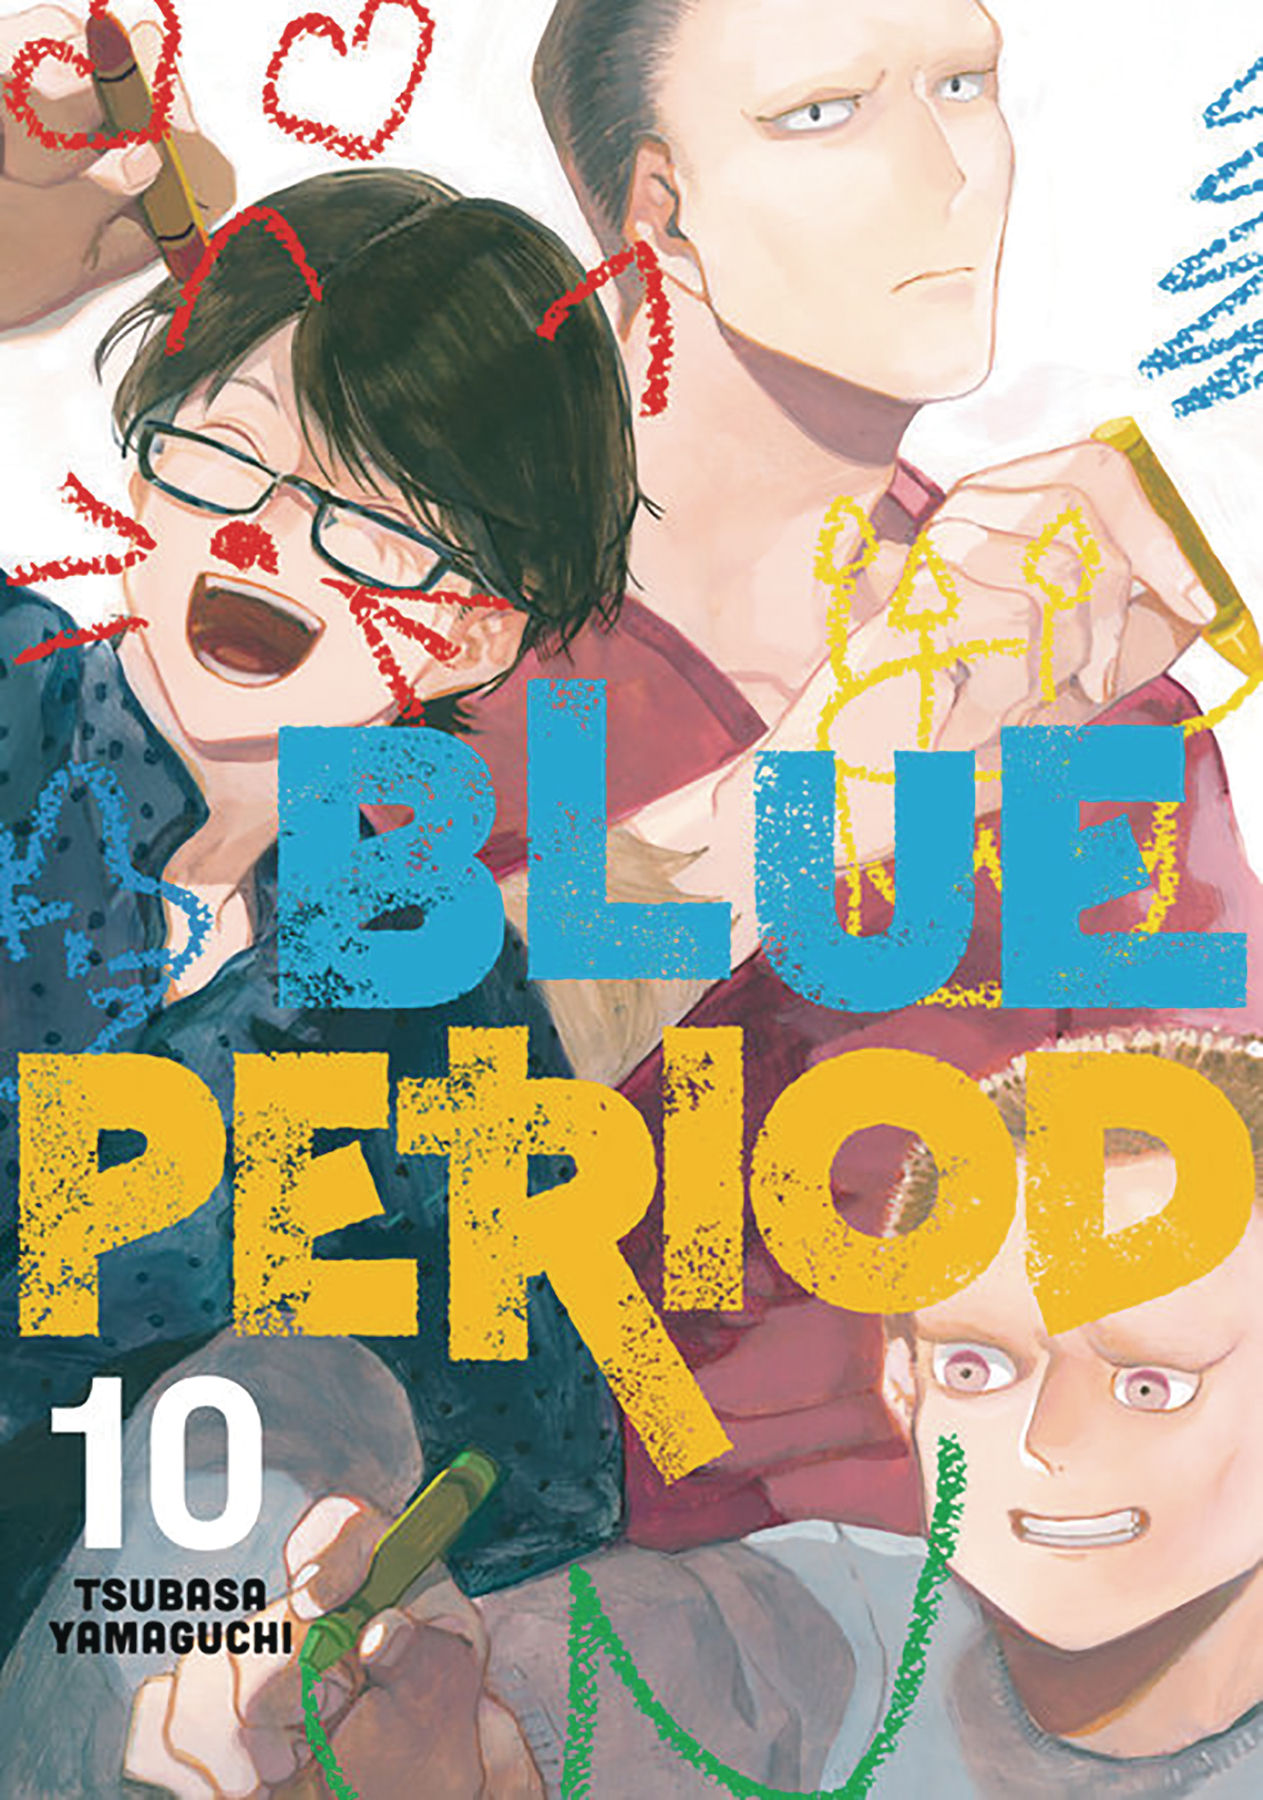 Blue Period Manga Volume 10